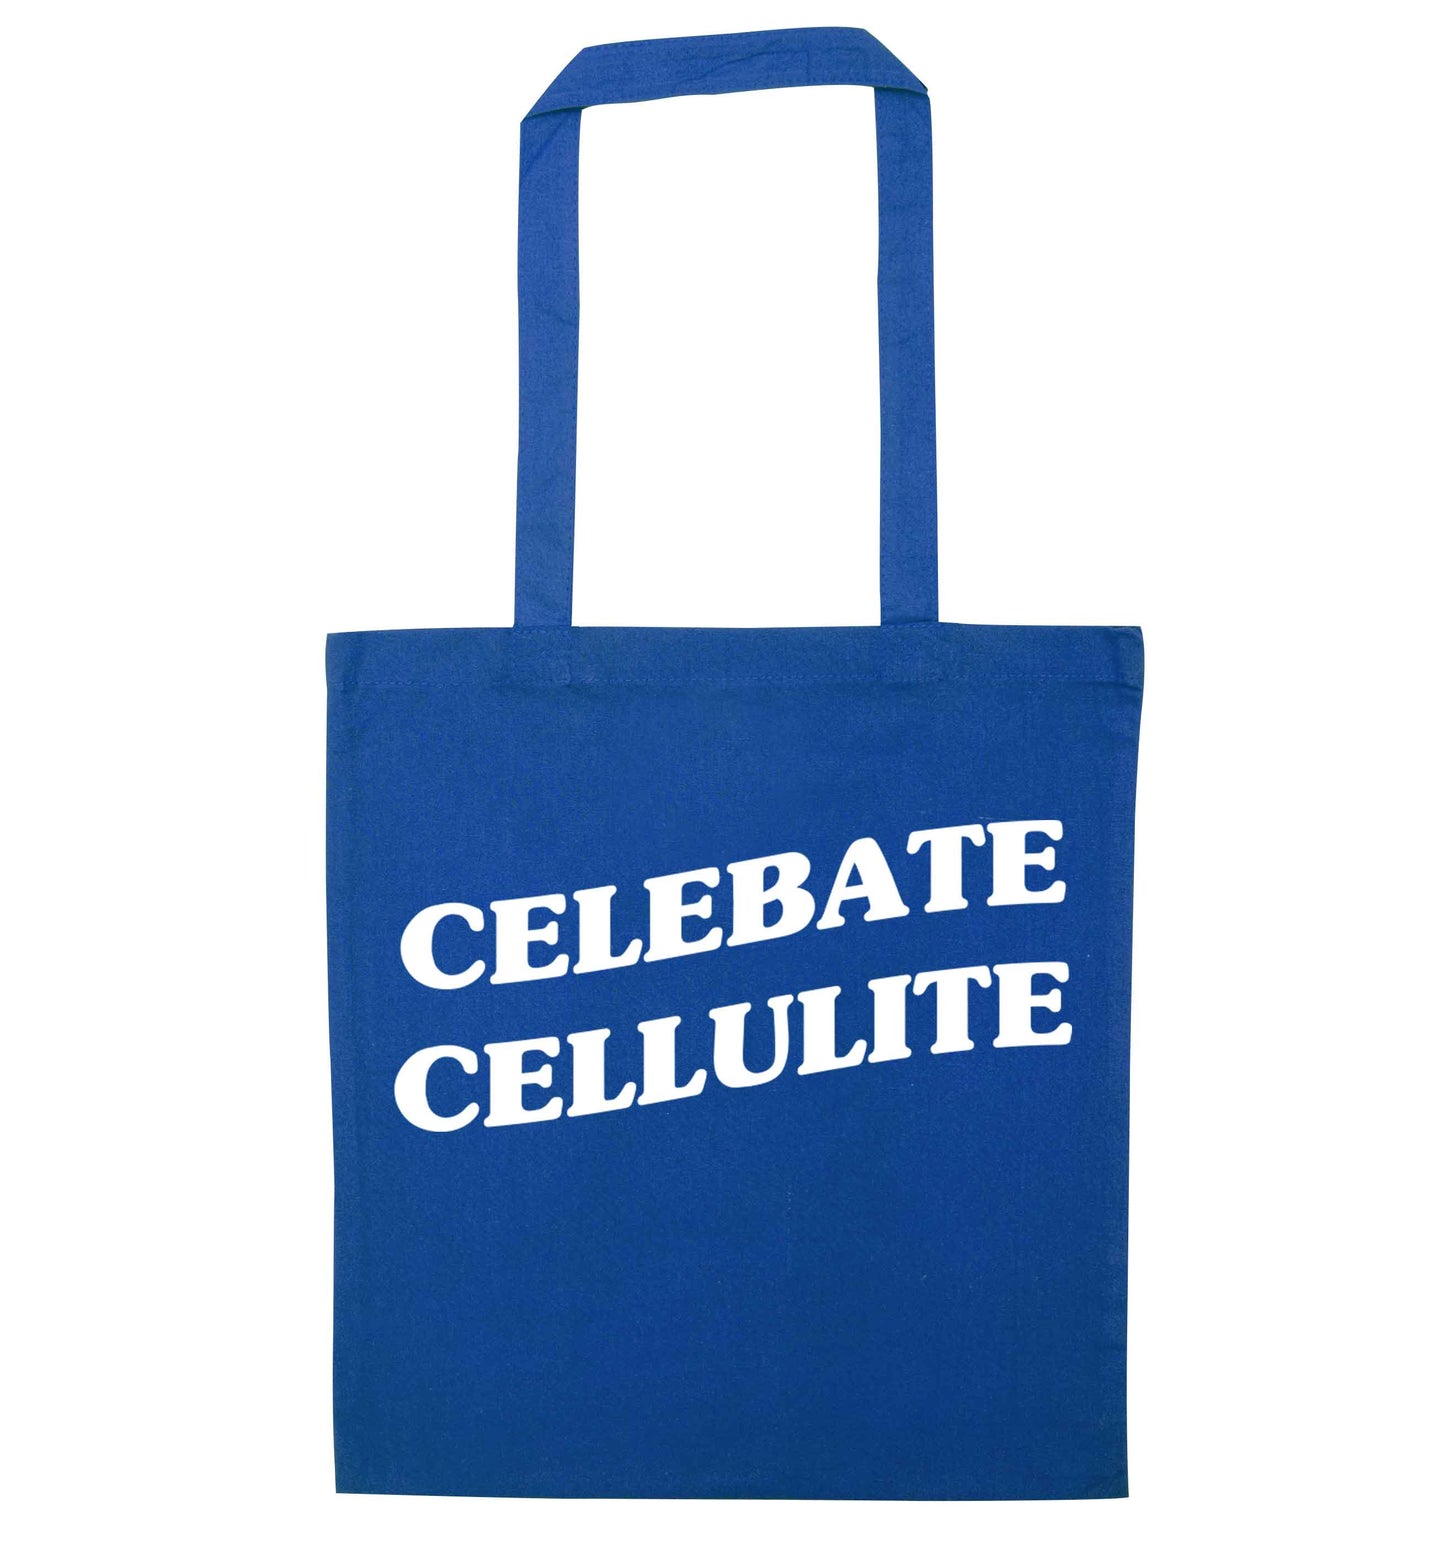 Celebrate cellulite blue tote bag